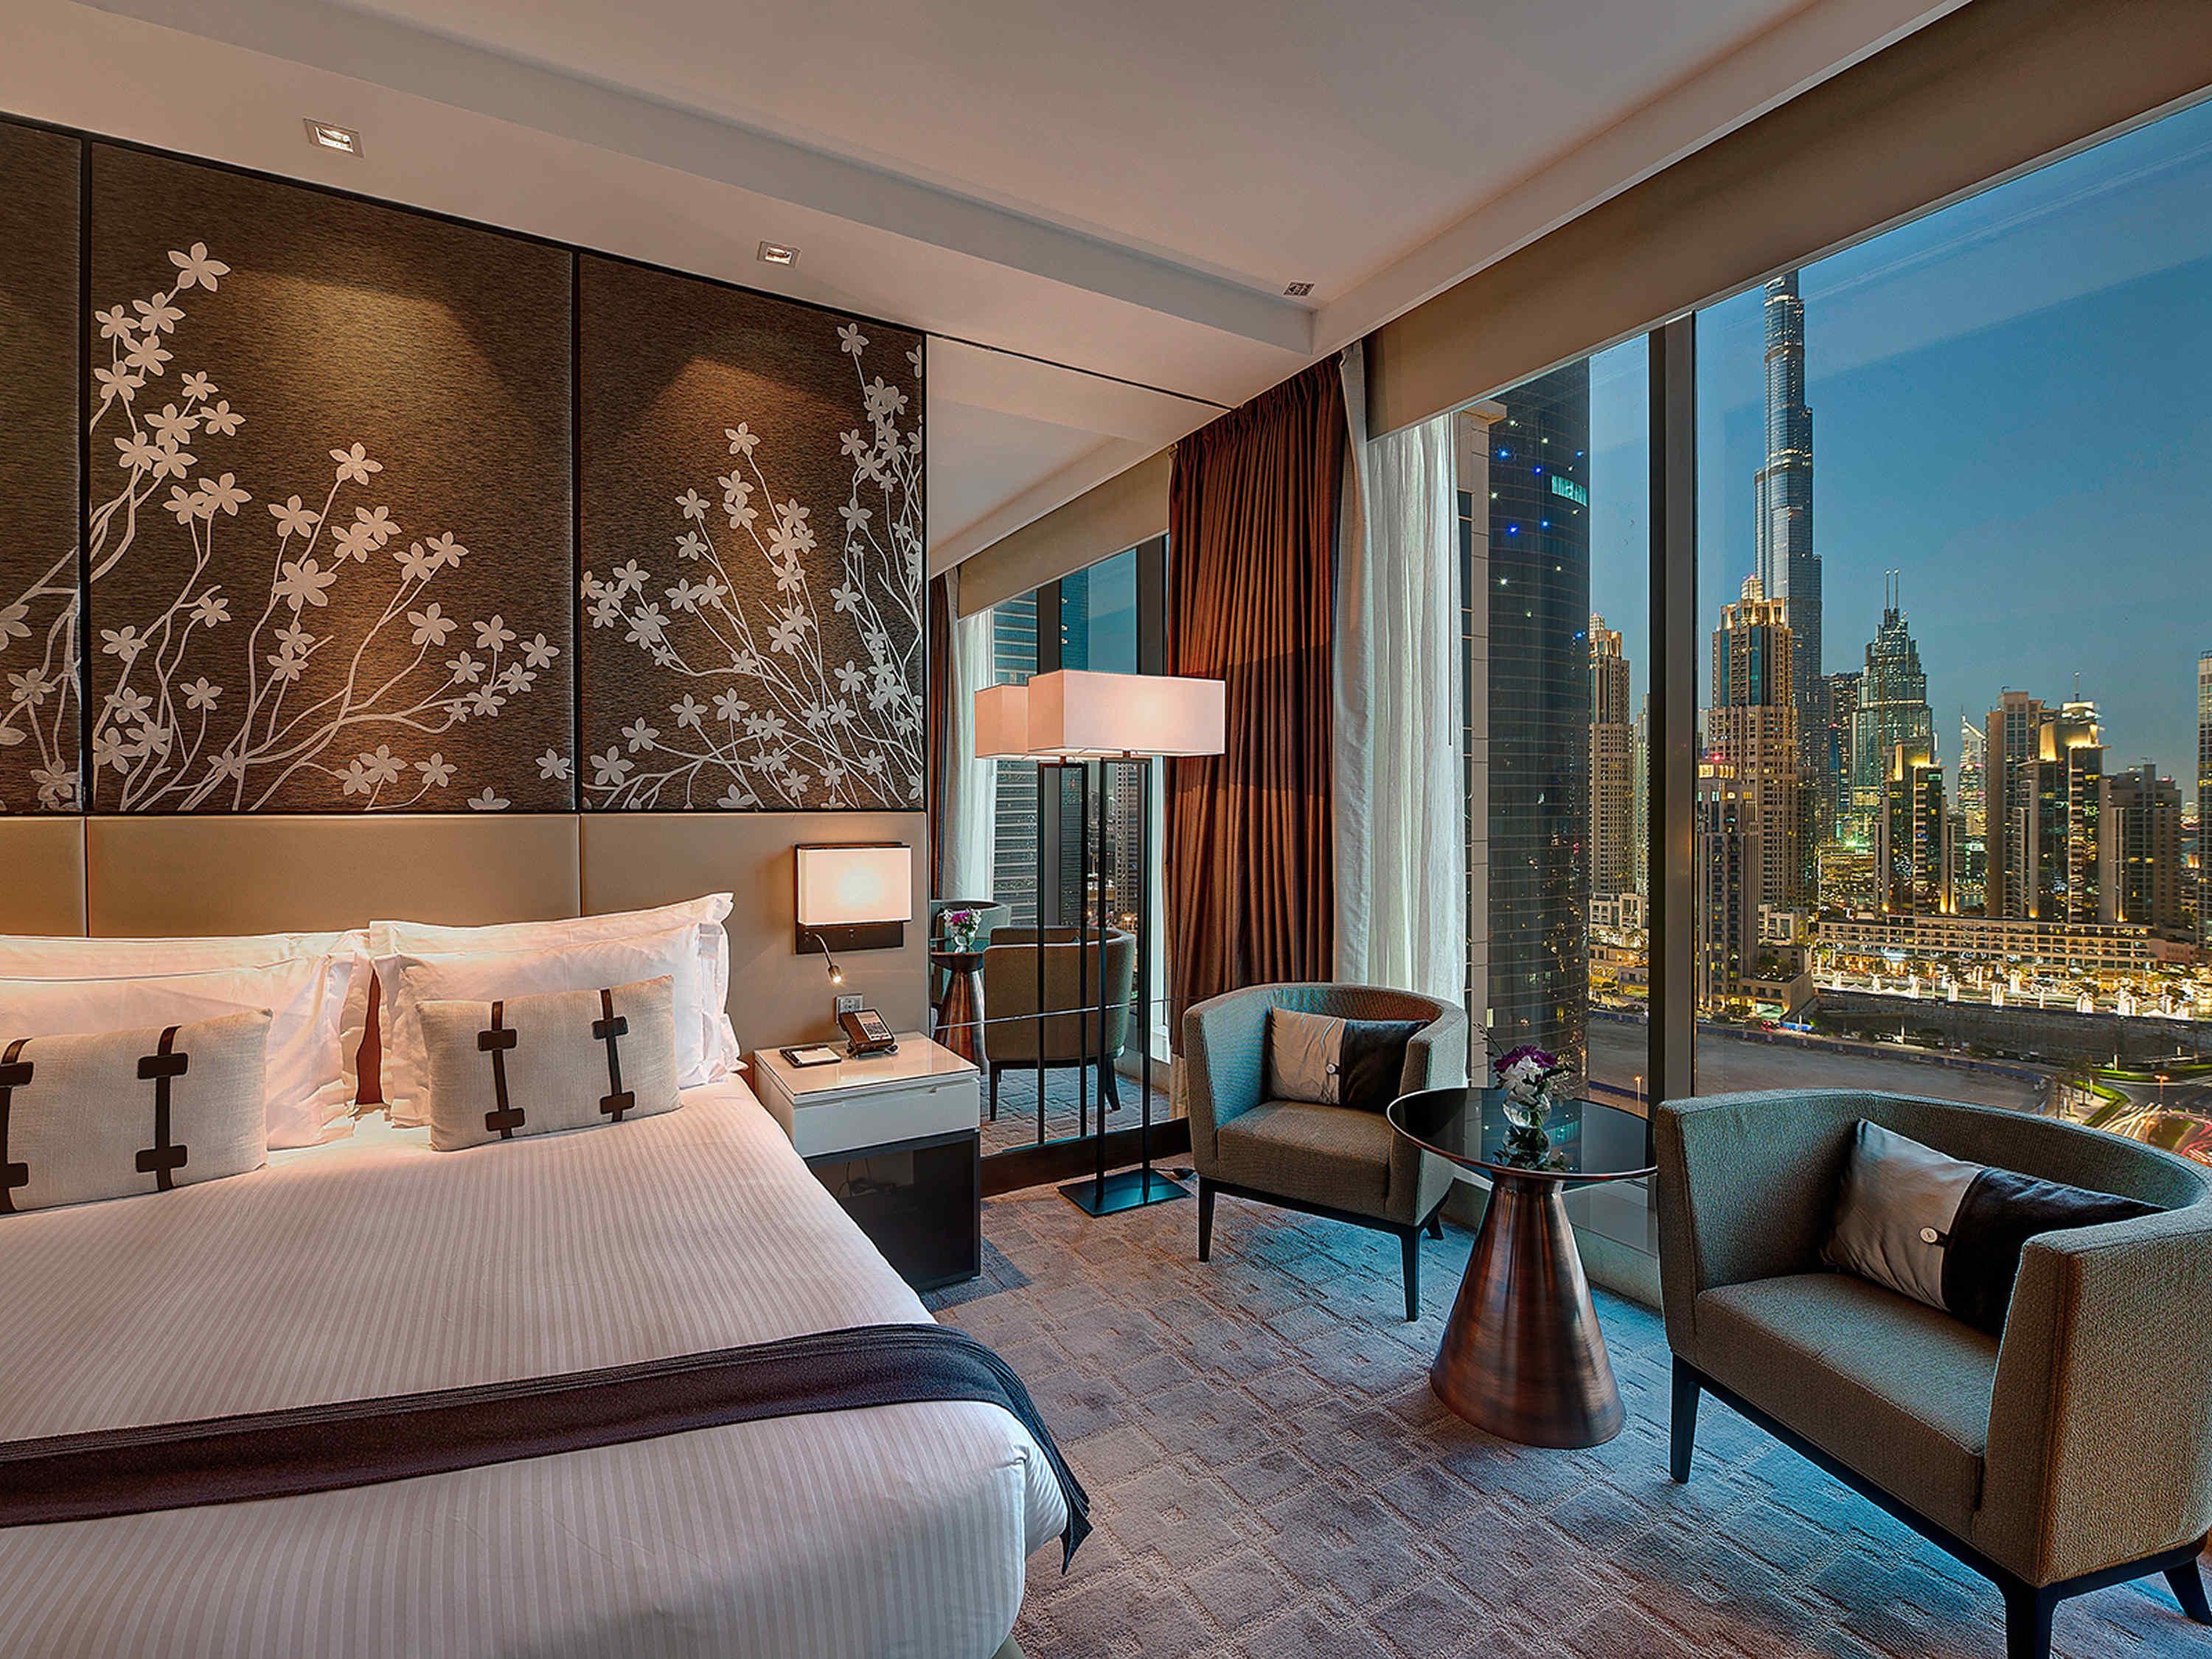 10 Tage Dubai im Pullman Dubai Downtown Hotel